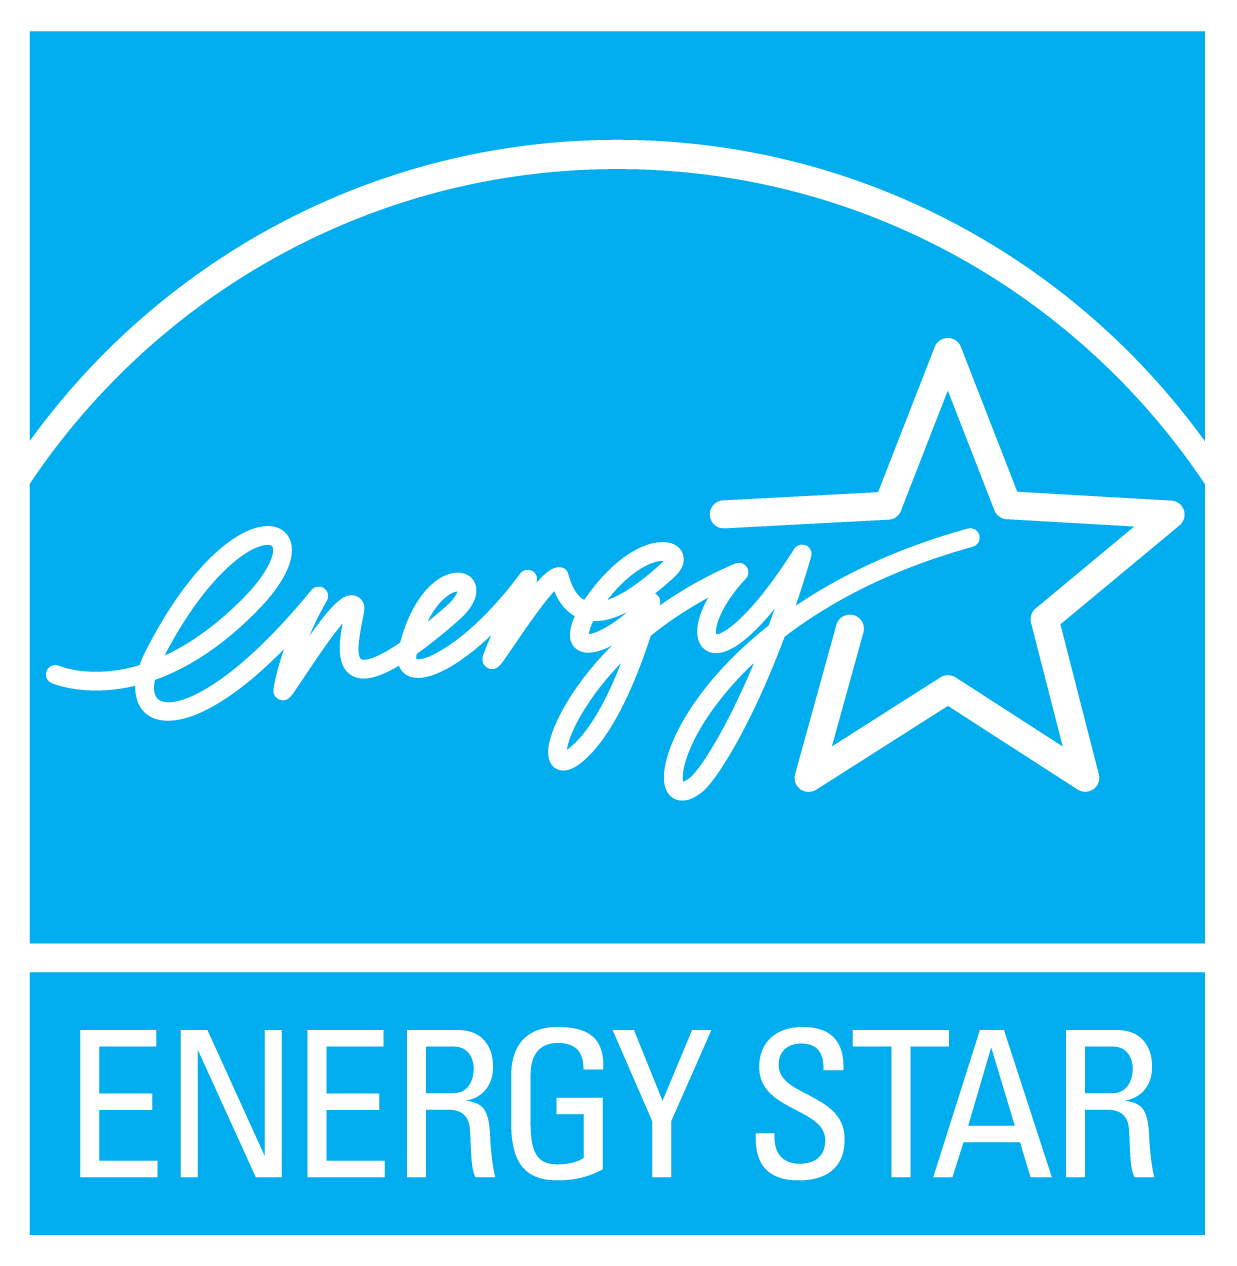 ENERGY STAR certified